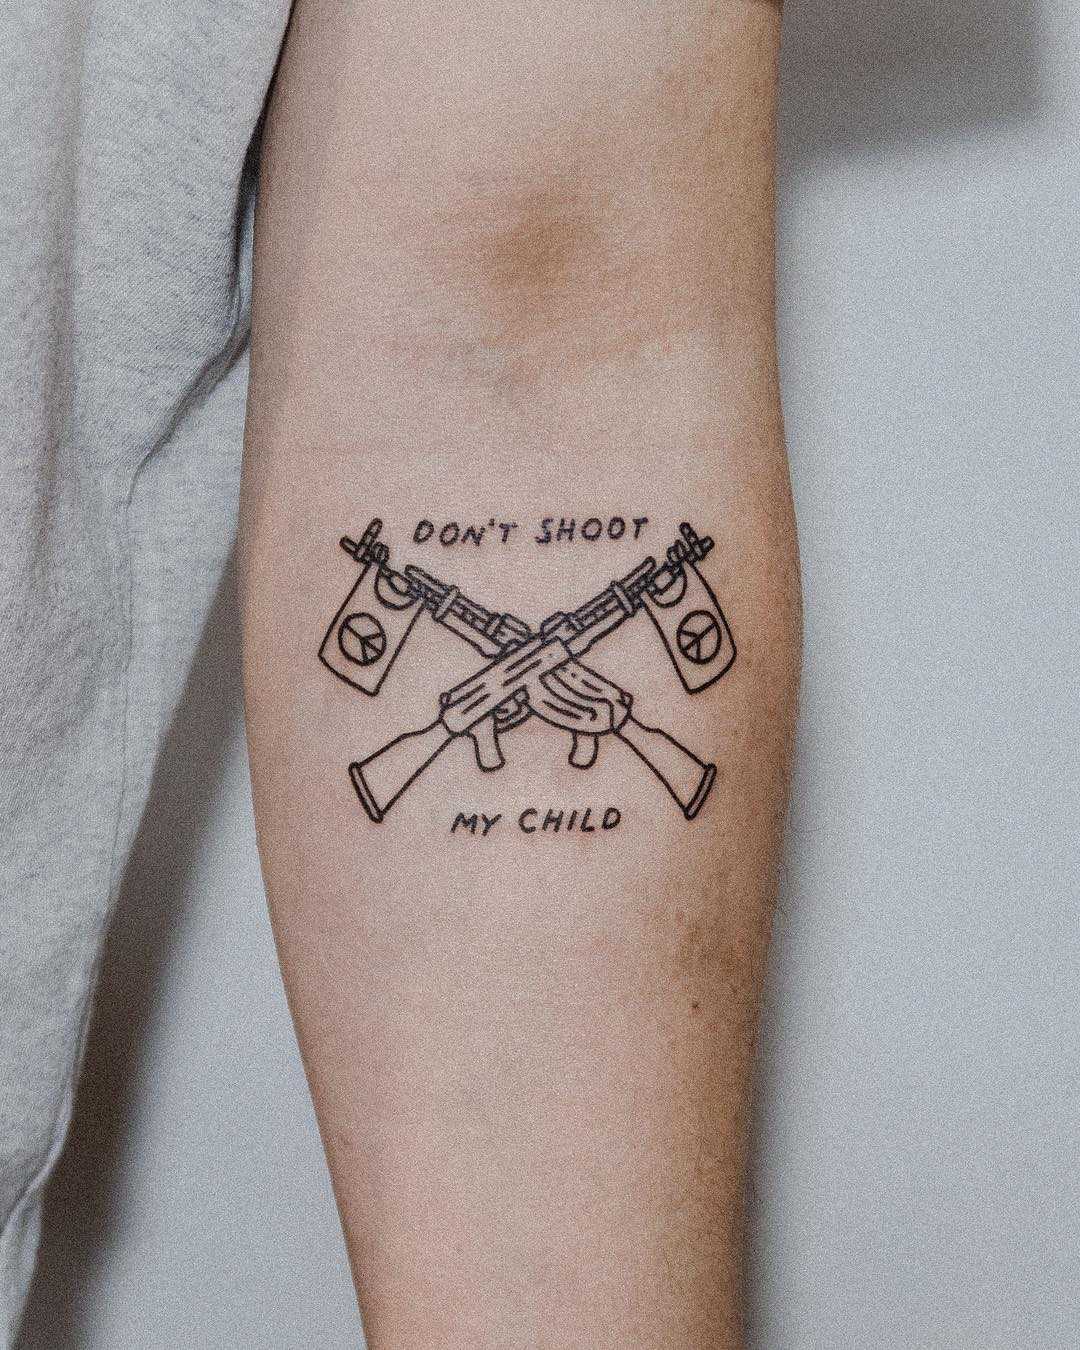 Don’t shoot my child by tattooist Bongkee